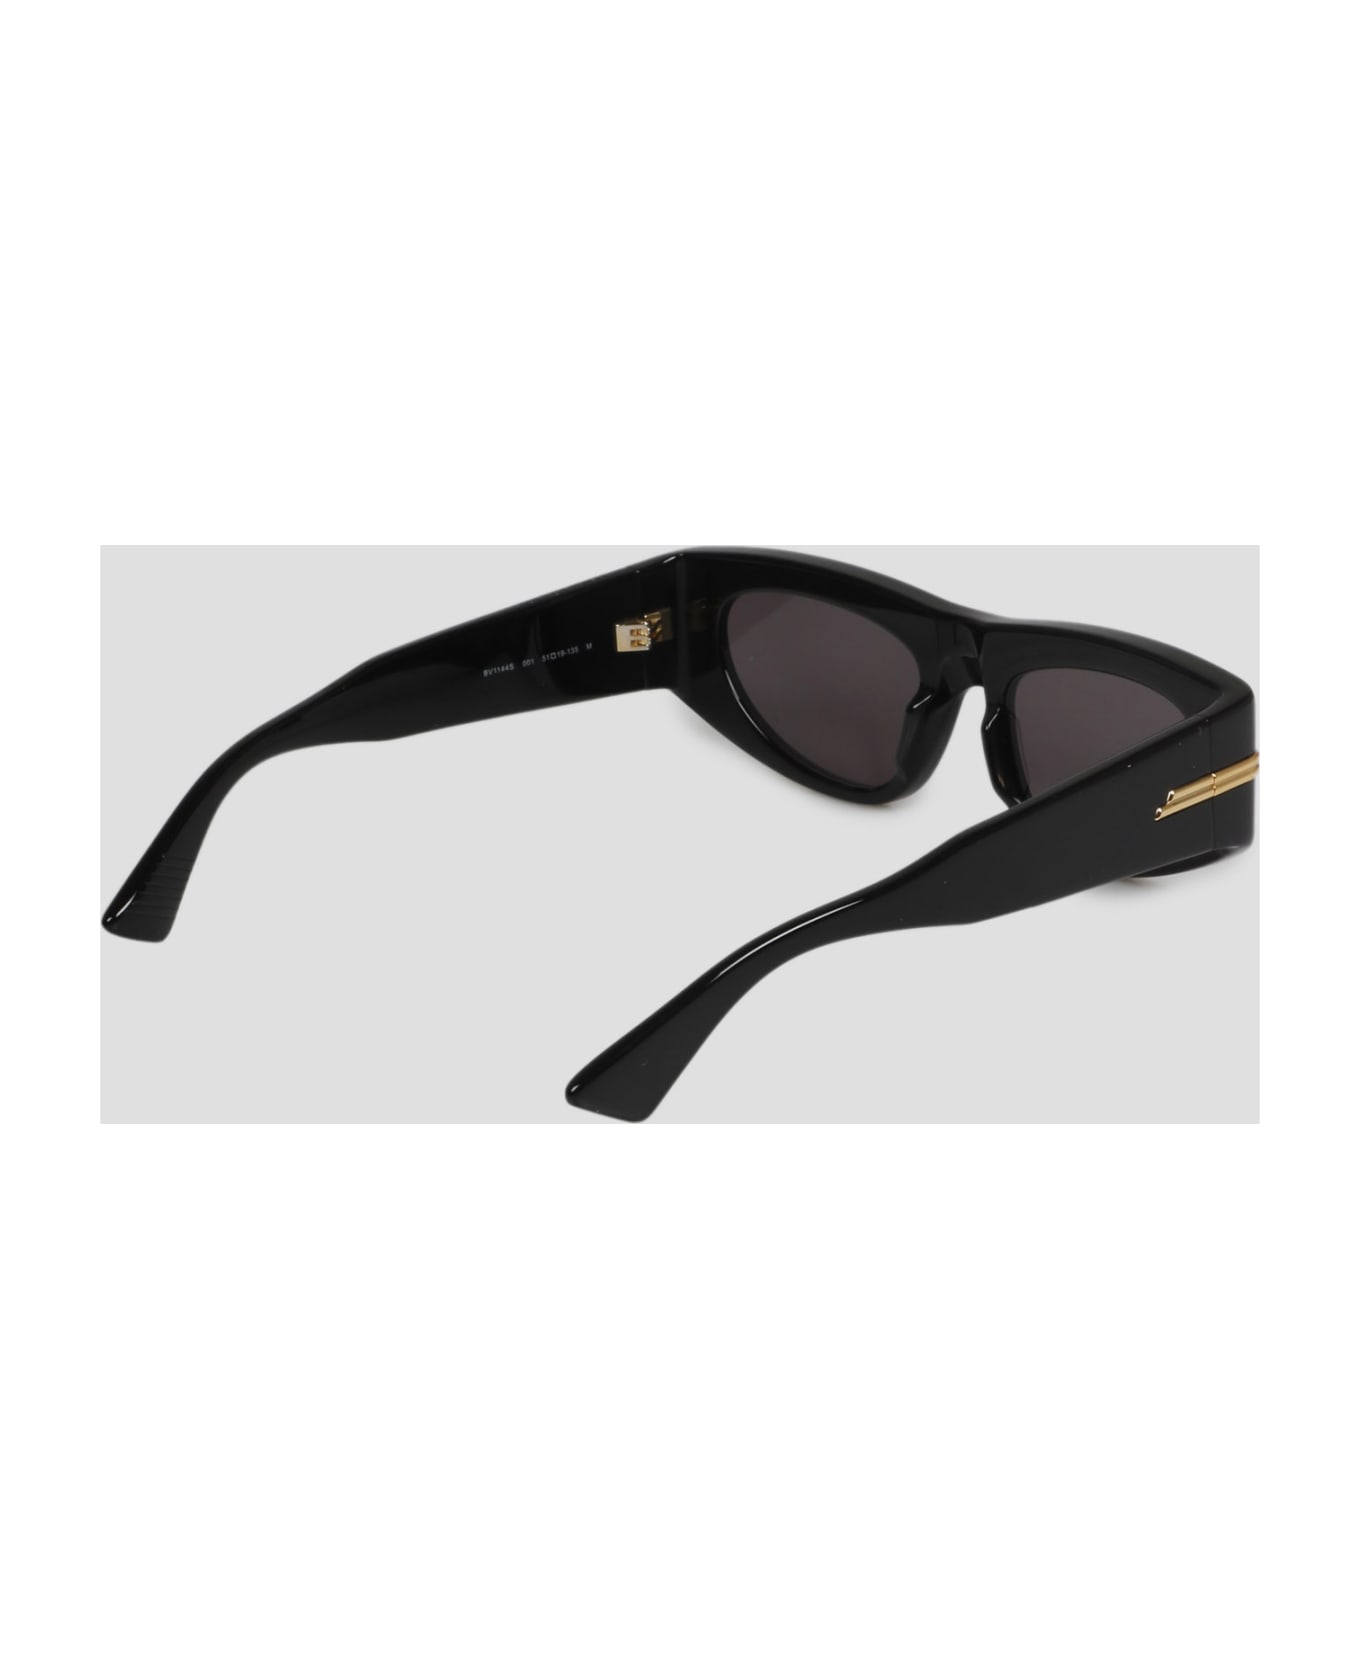 Bottega Veneta Eyewear Mitre Sunglasses - Black サングラス